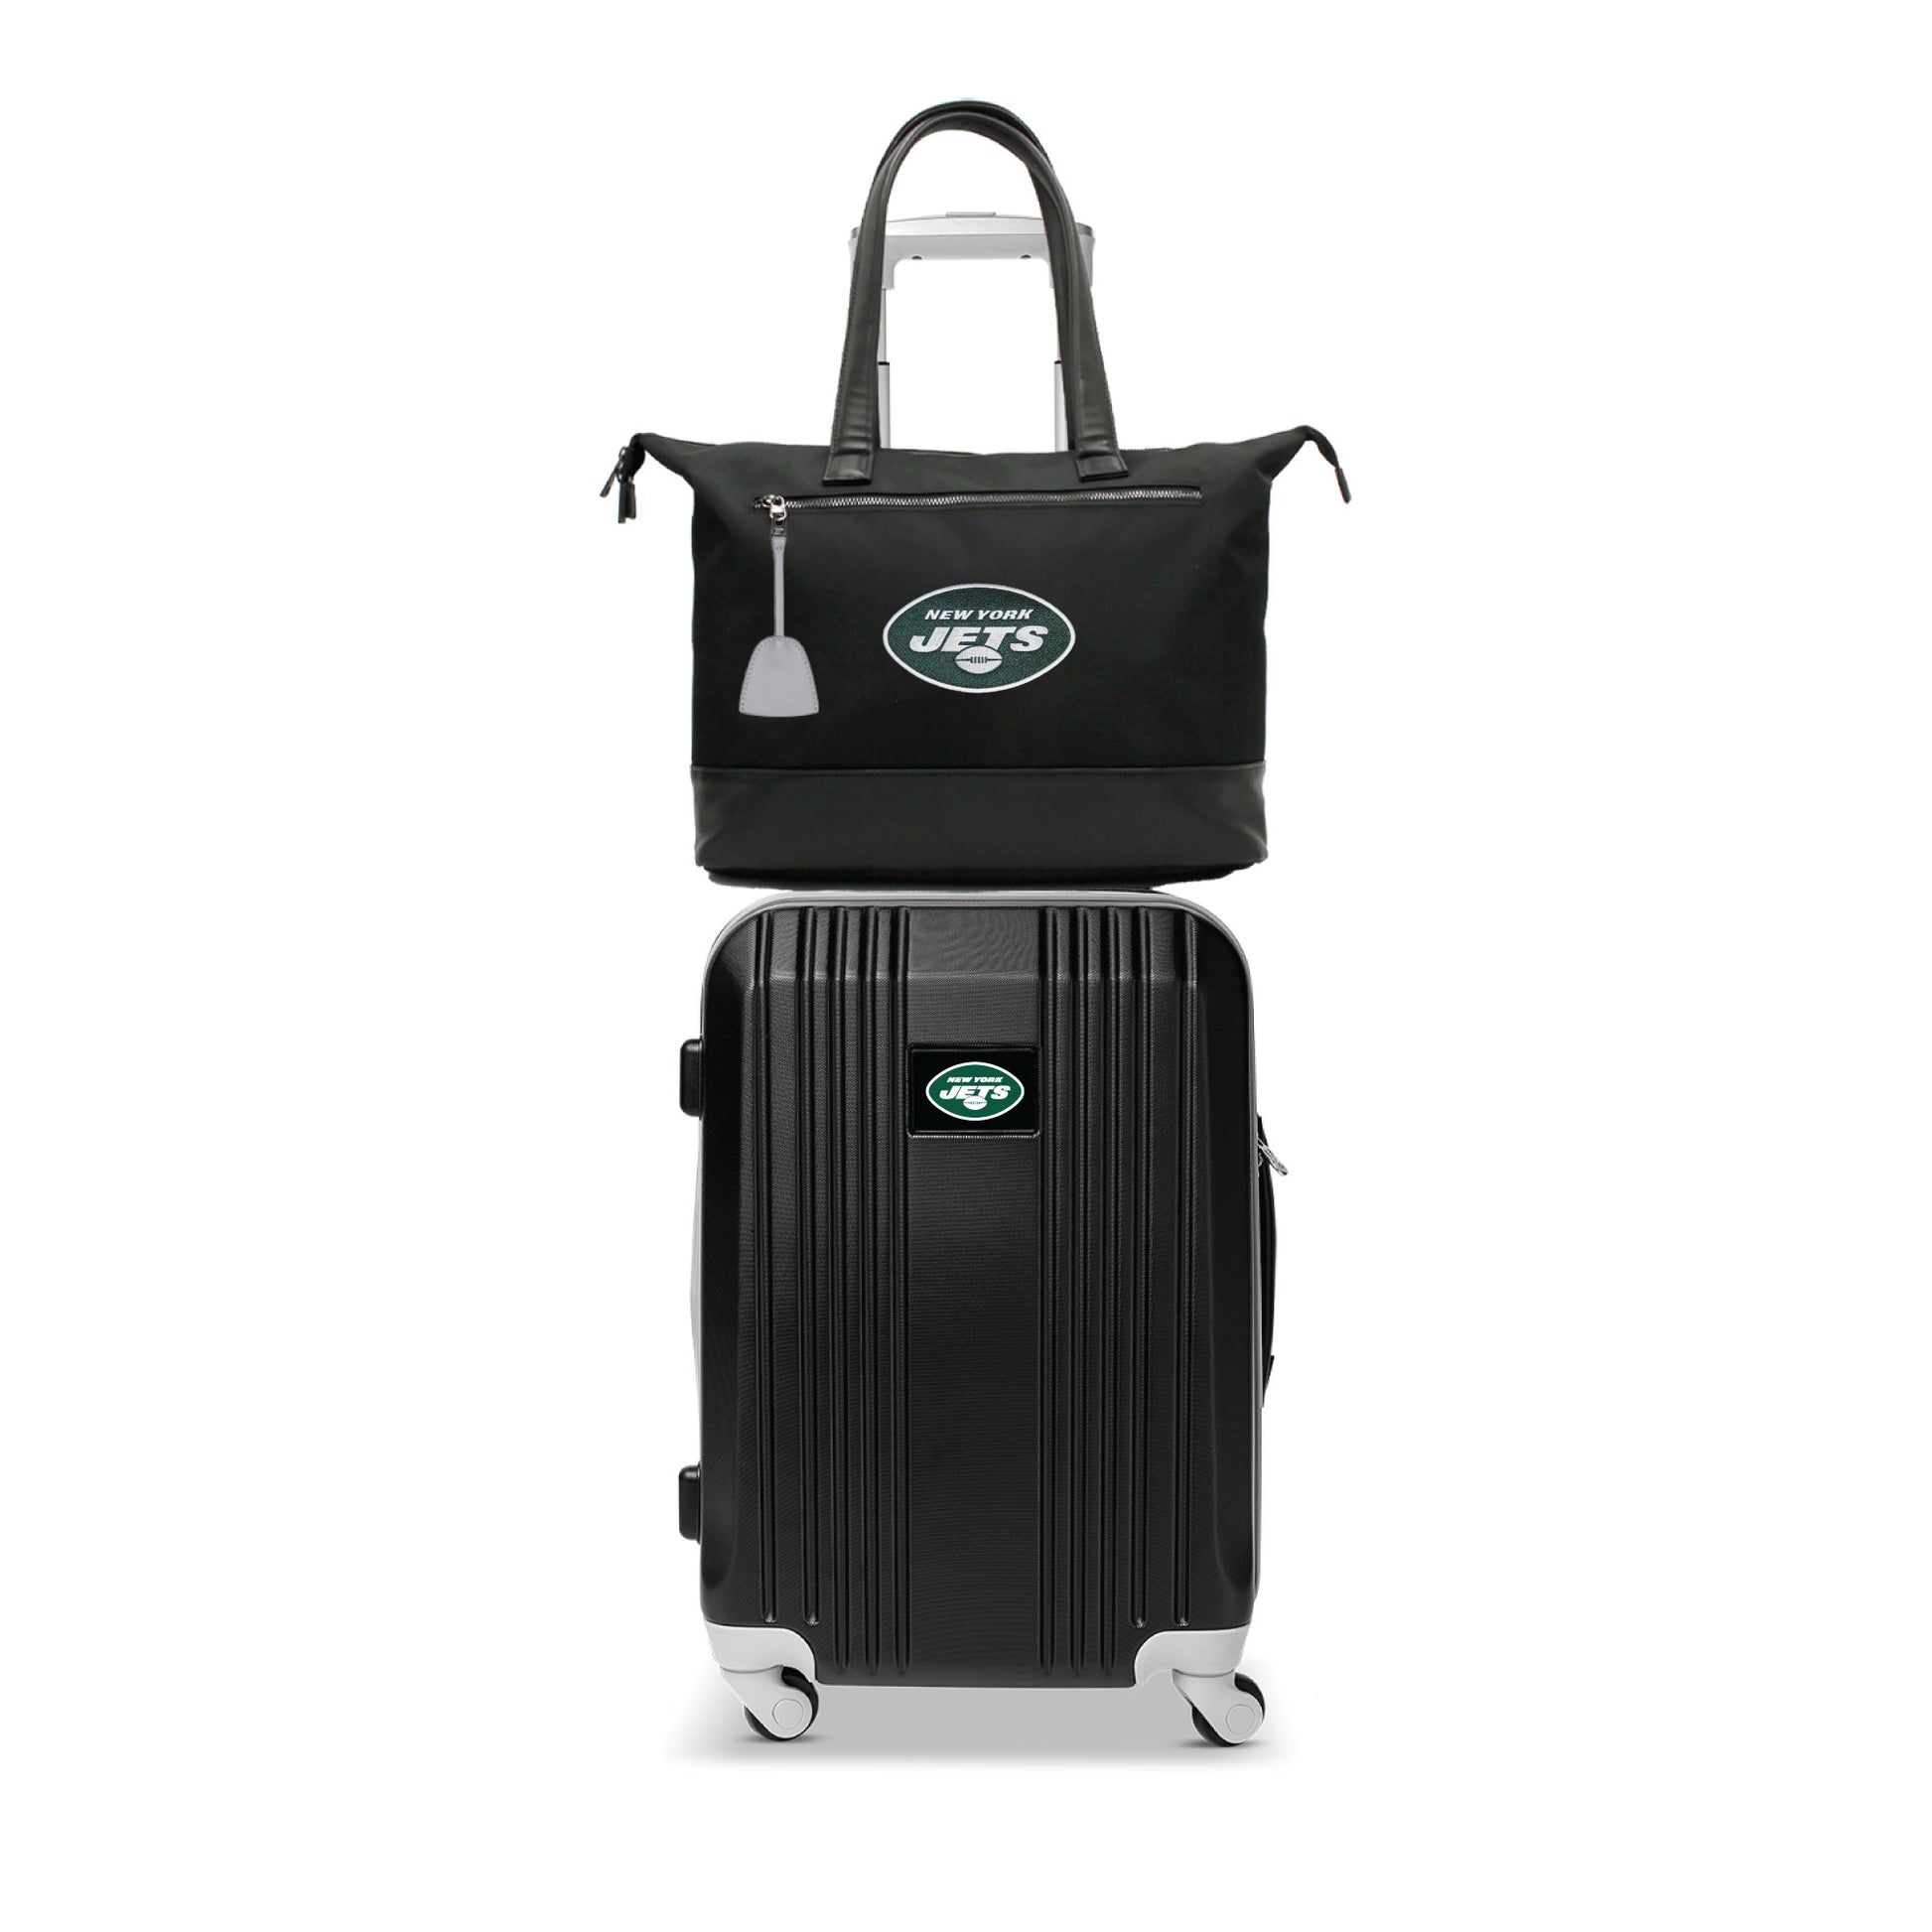 New York Jets Premium Laptop Tote Bag and Luggage Set